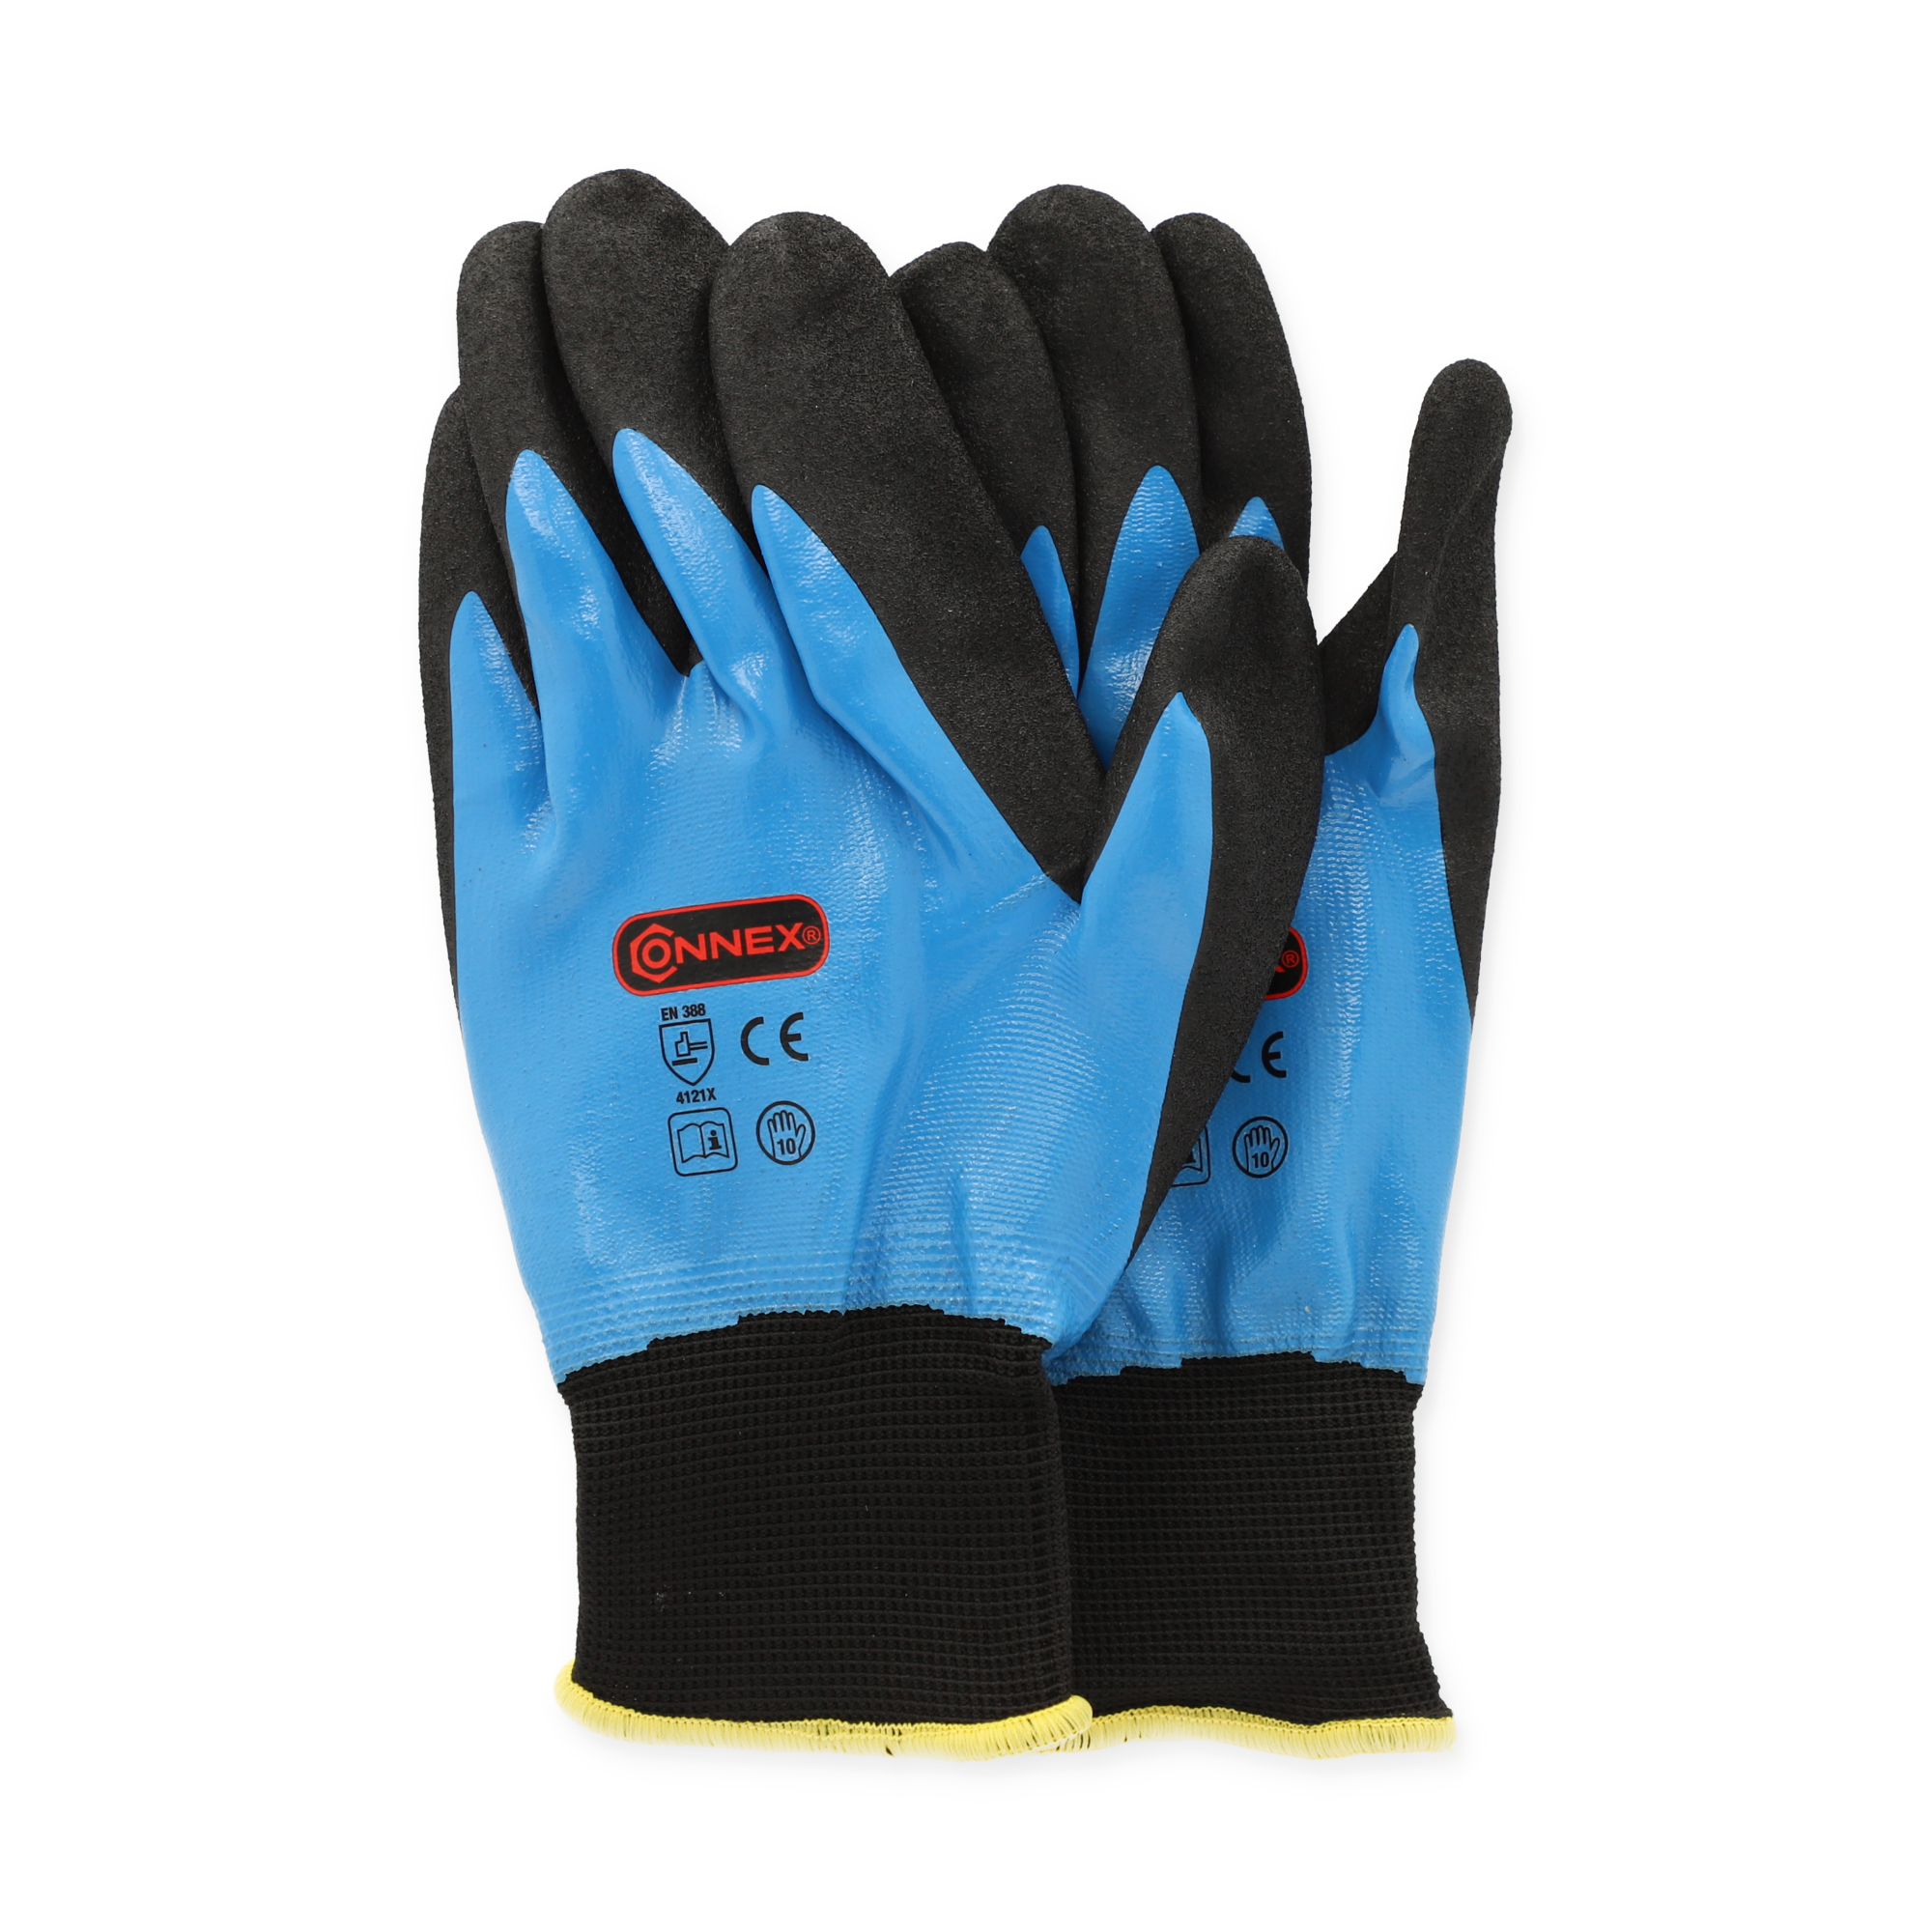 Handschuhe blau/schwarz Gr. 9 + product picture